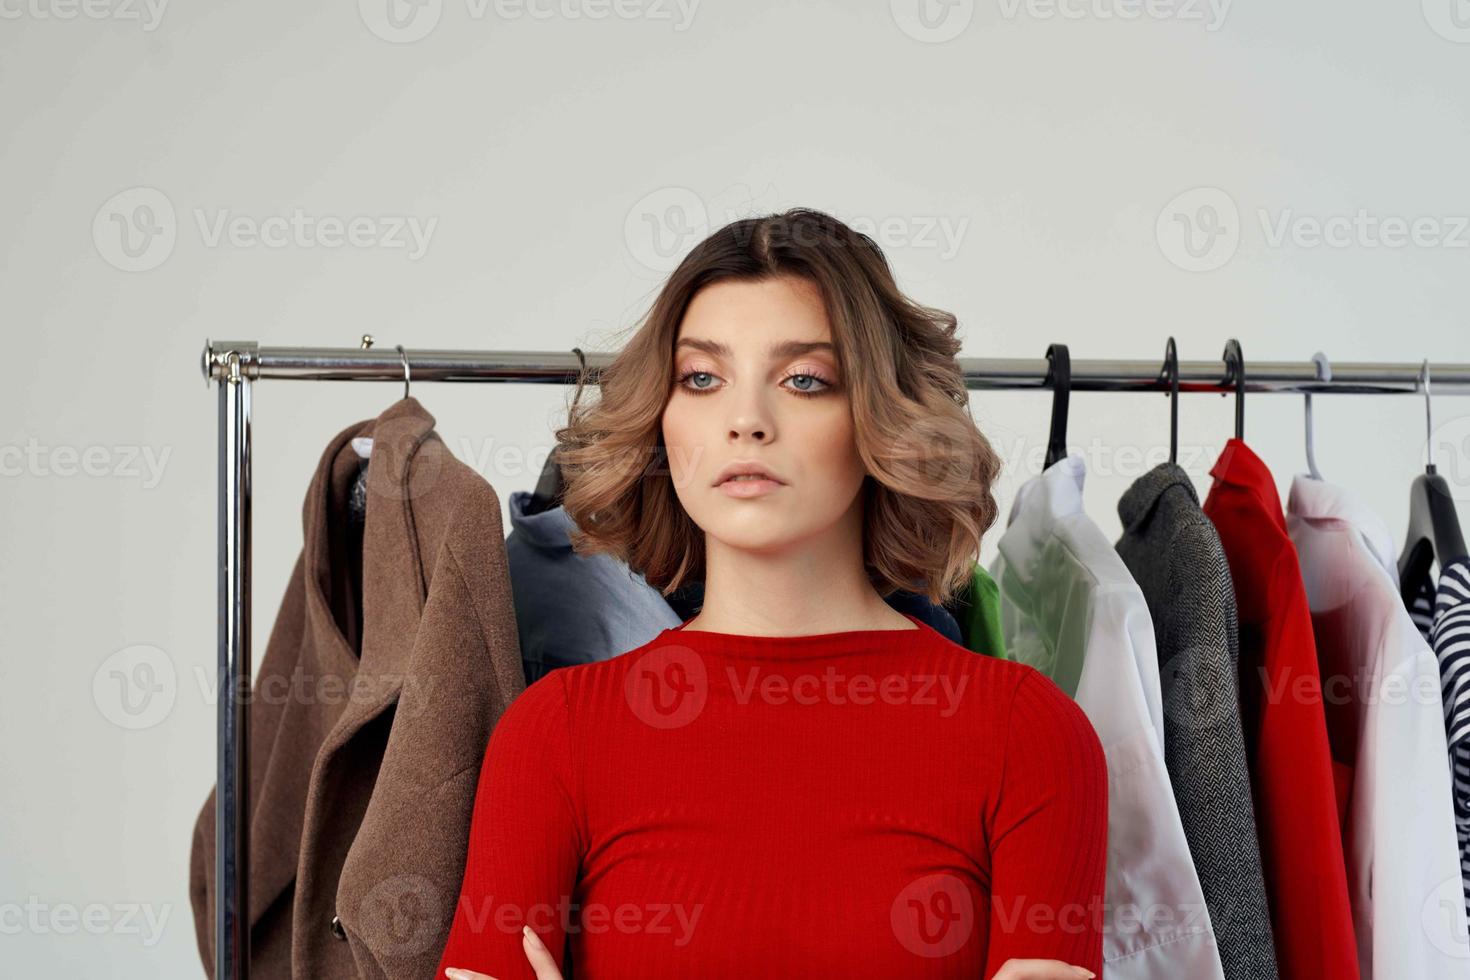 cheerful woman next to clothes fashion fun retail emotions photo